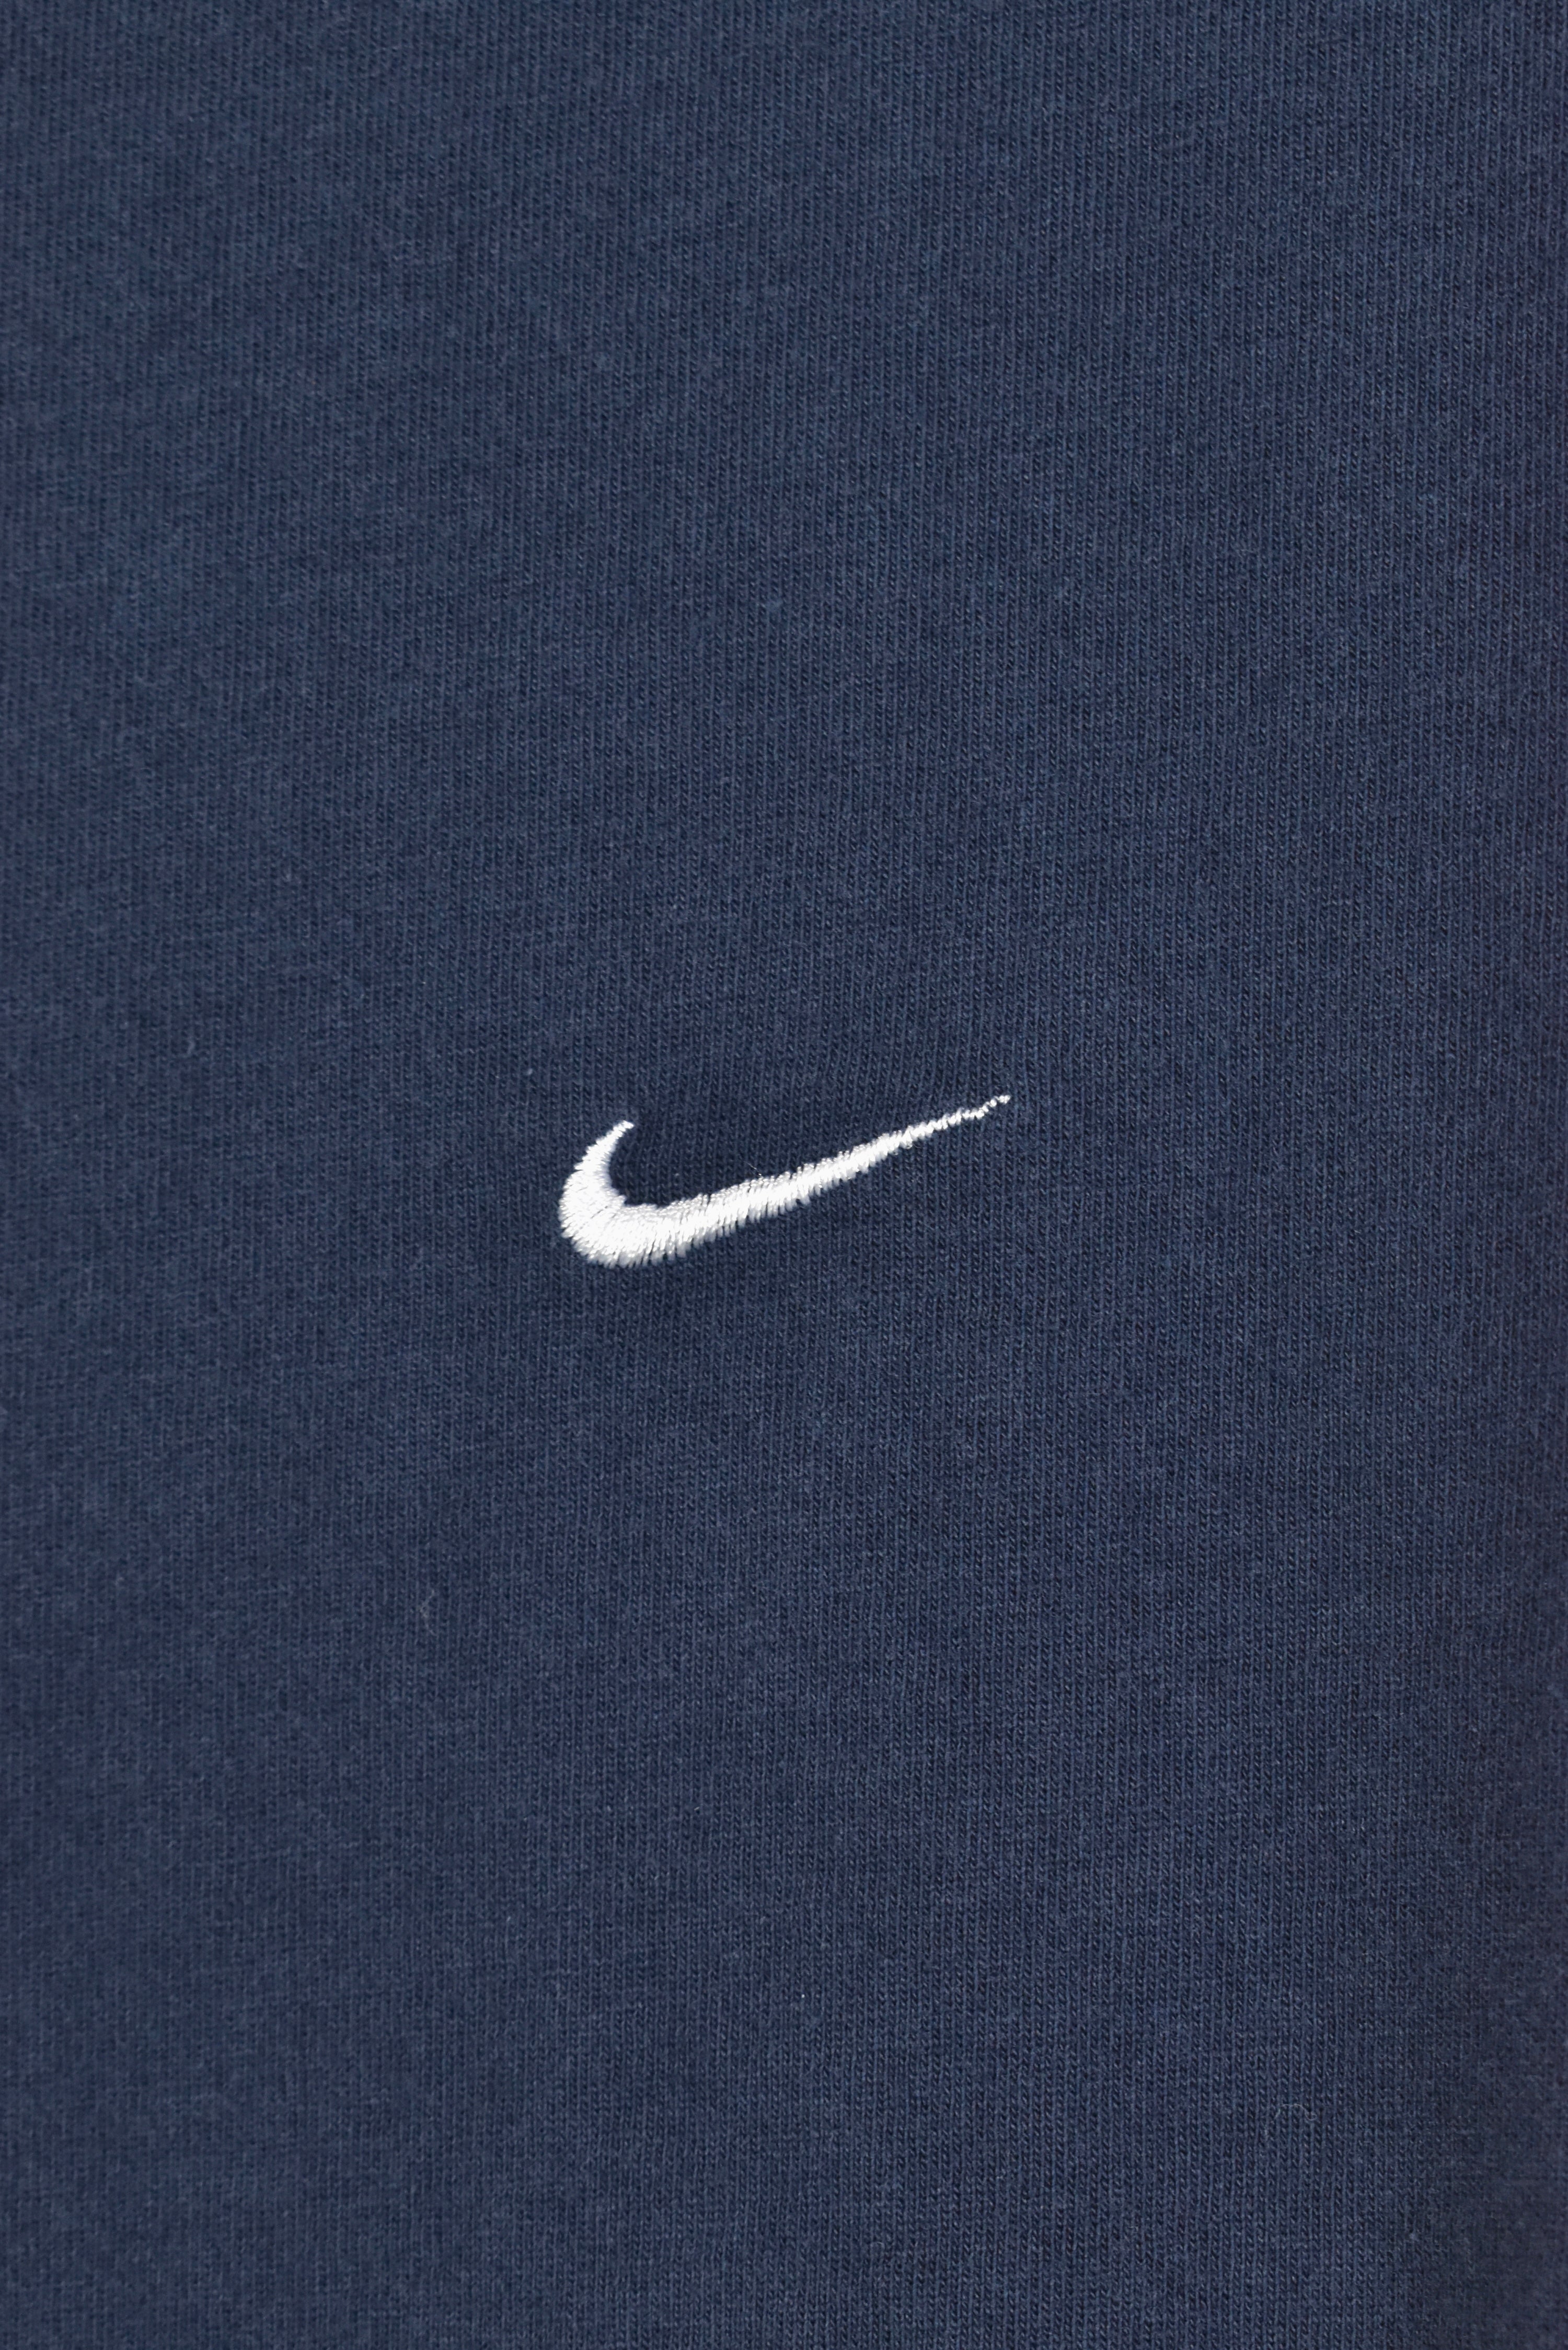 Vintage Nike shirt, short sleeve embroidered tee - XL, navy blue NIKE